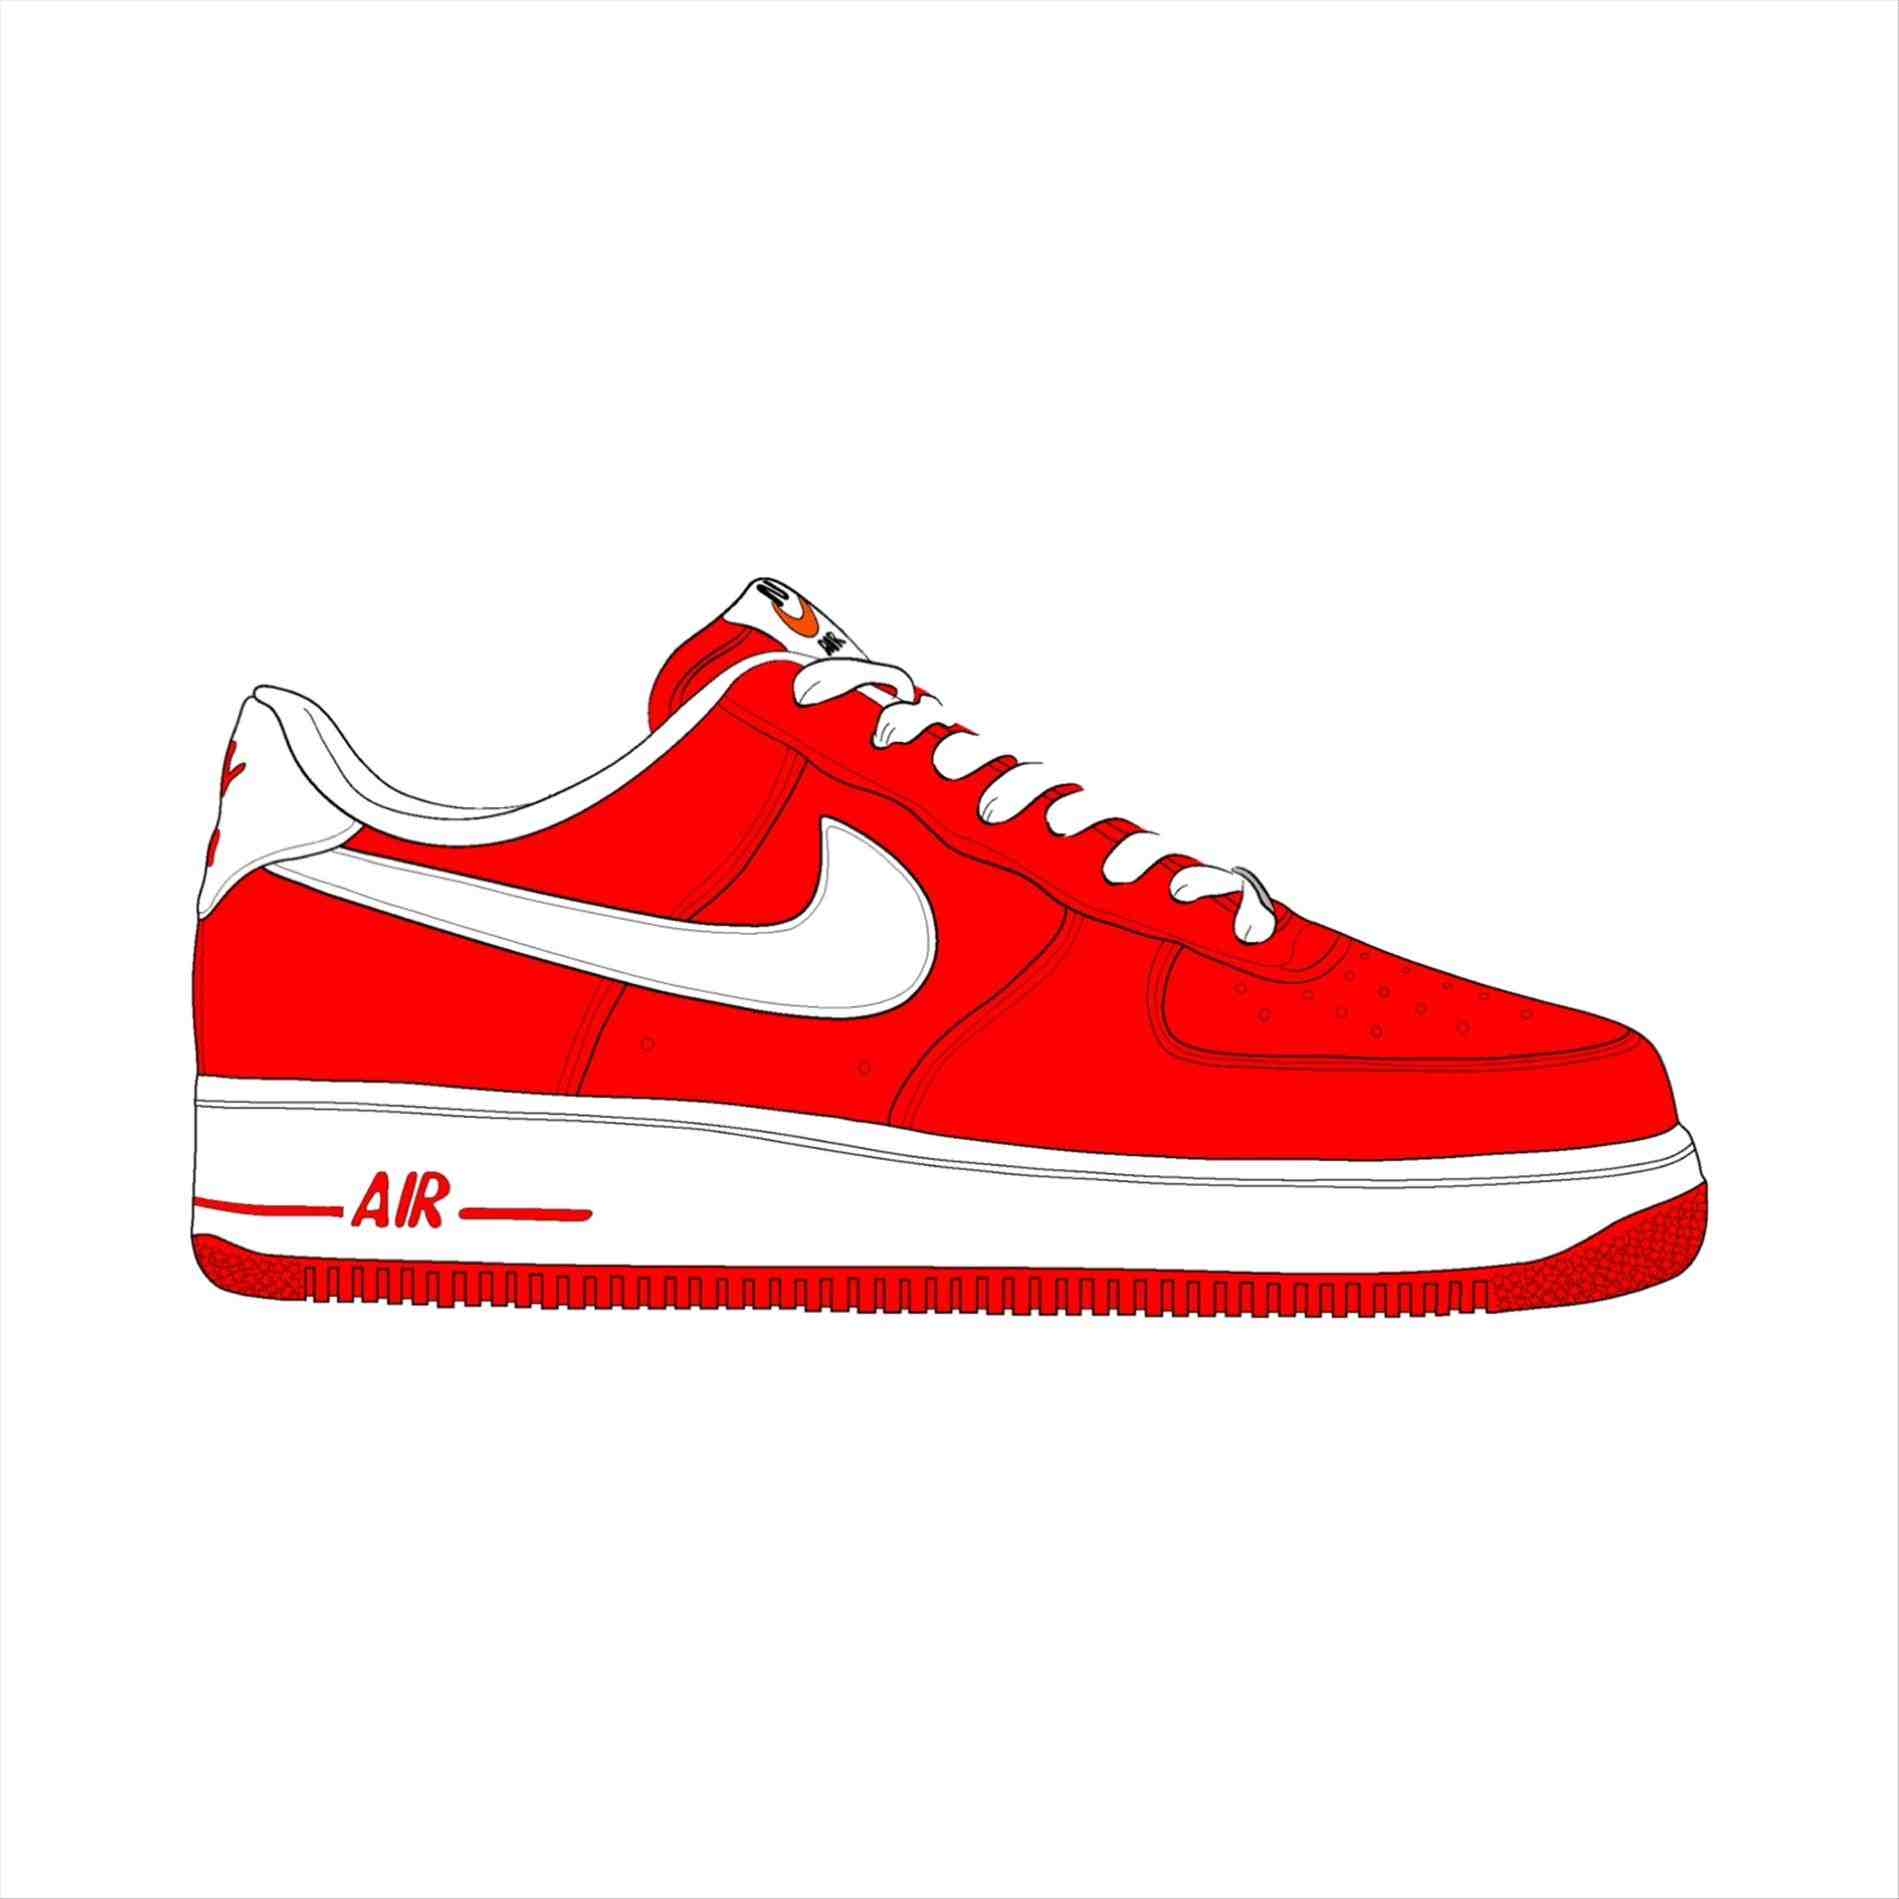 Shoes Drawing Images : Nike Drawing Jordan Air Sneakers Shoes Cartoon ...